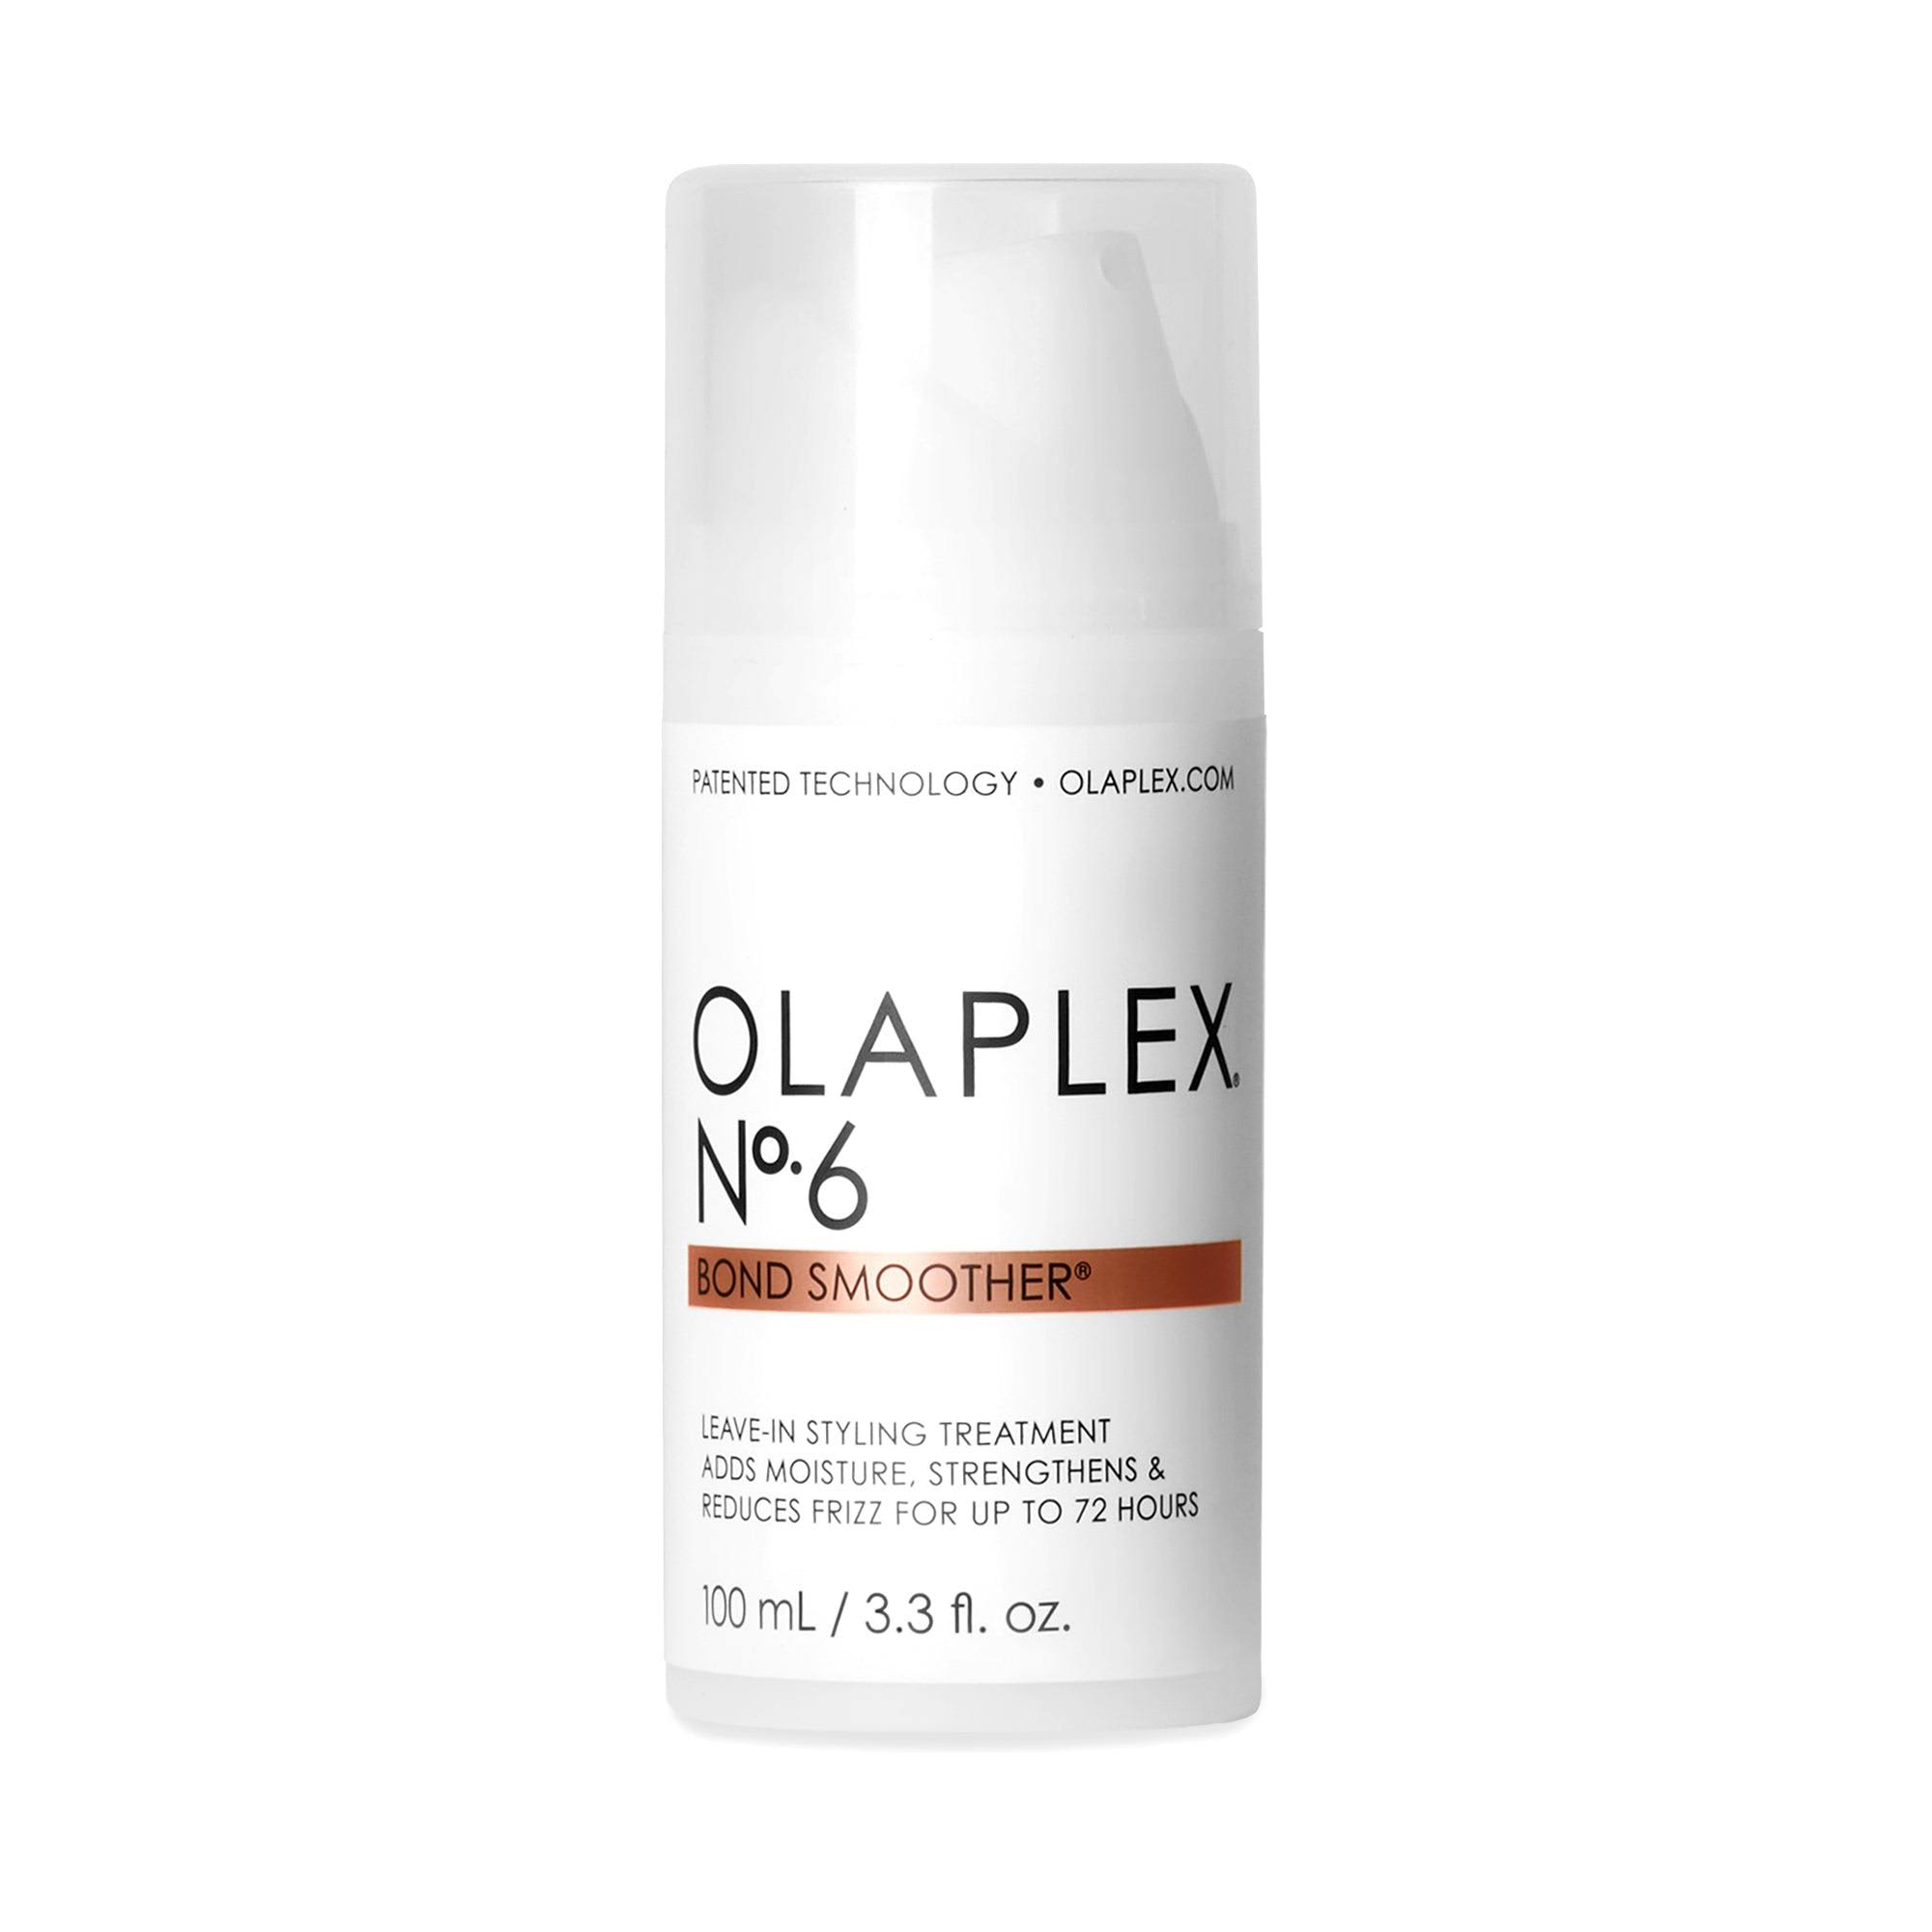 Olaplex Bond Smoother, No 6 - 100 ml